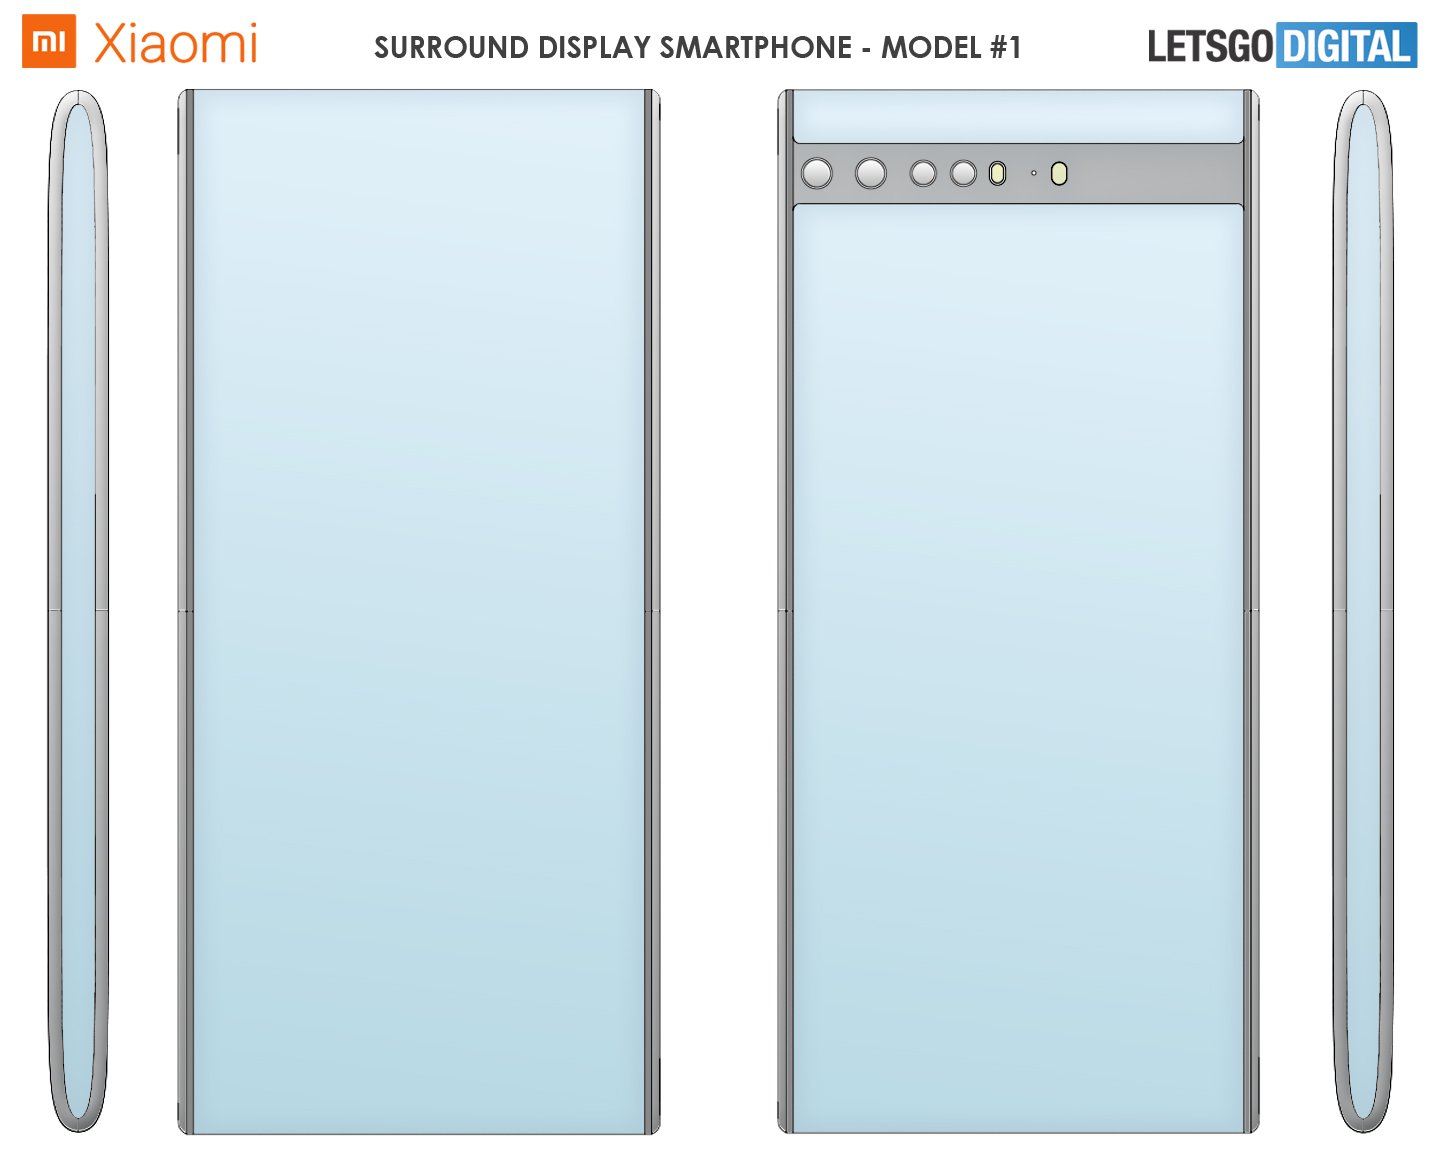 Xiaomi Surround Display Smartphone Design Patent 01